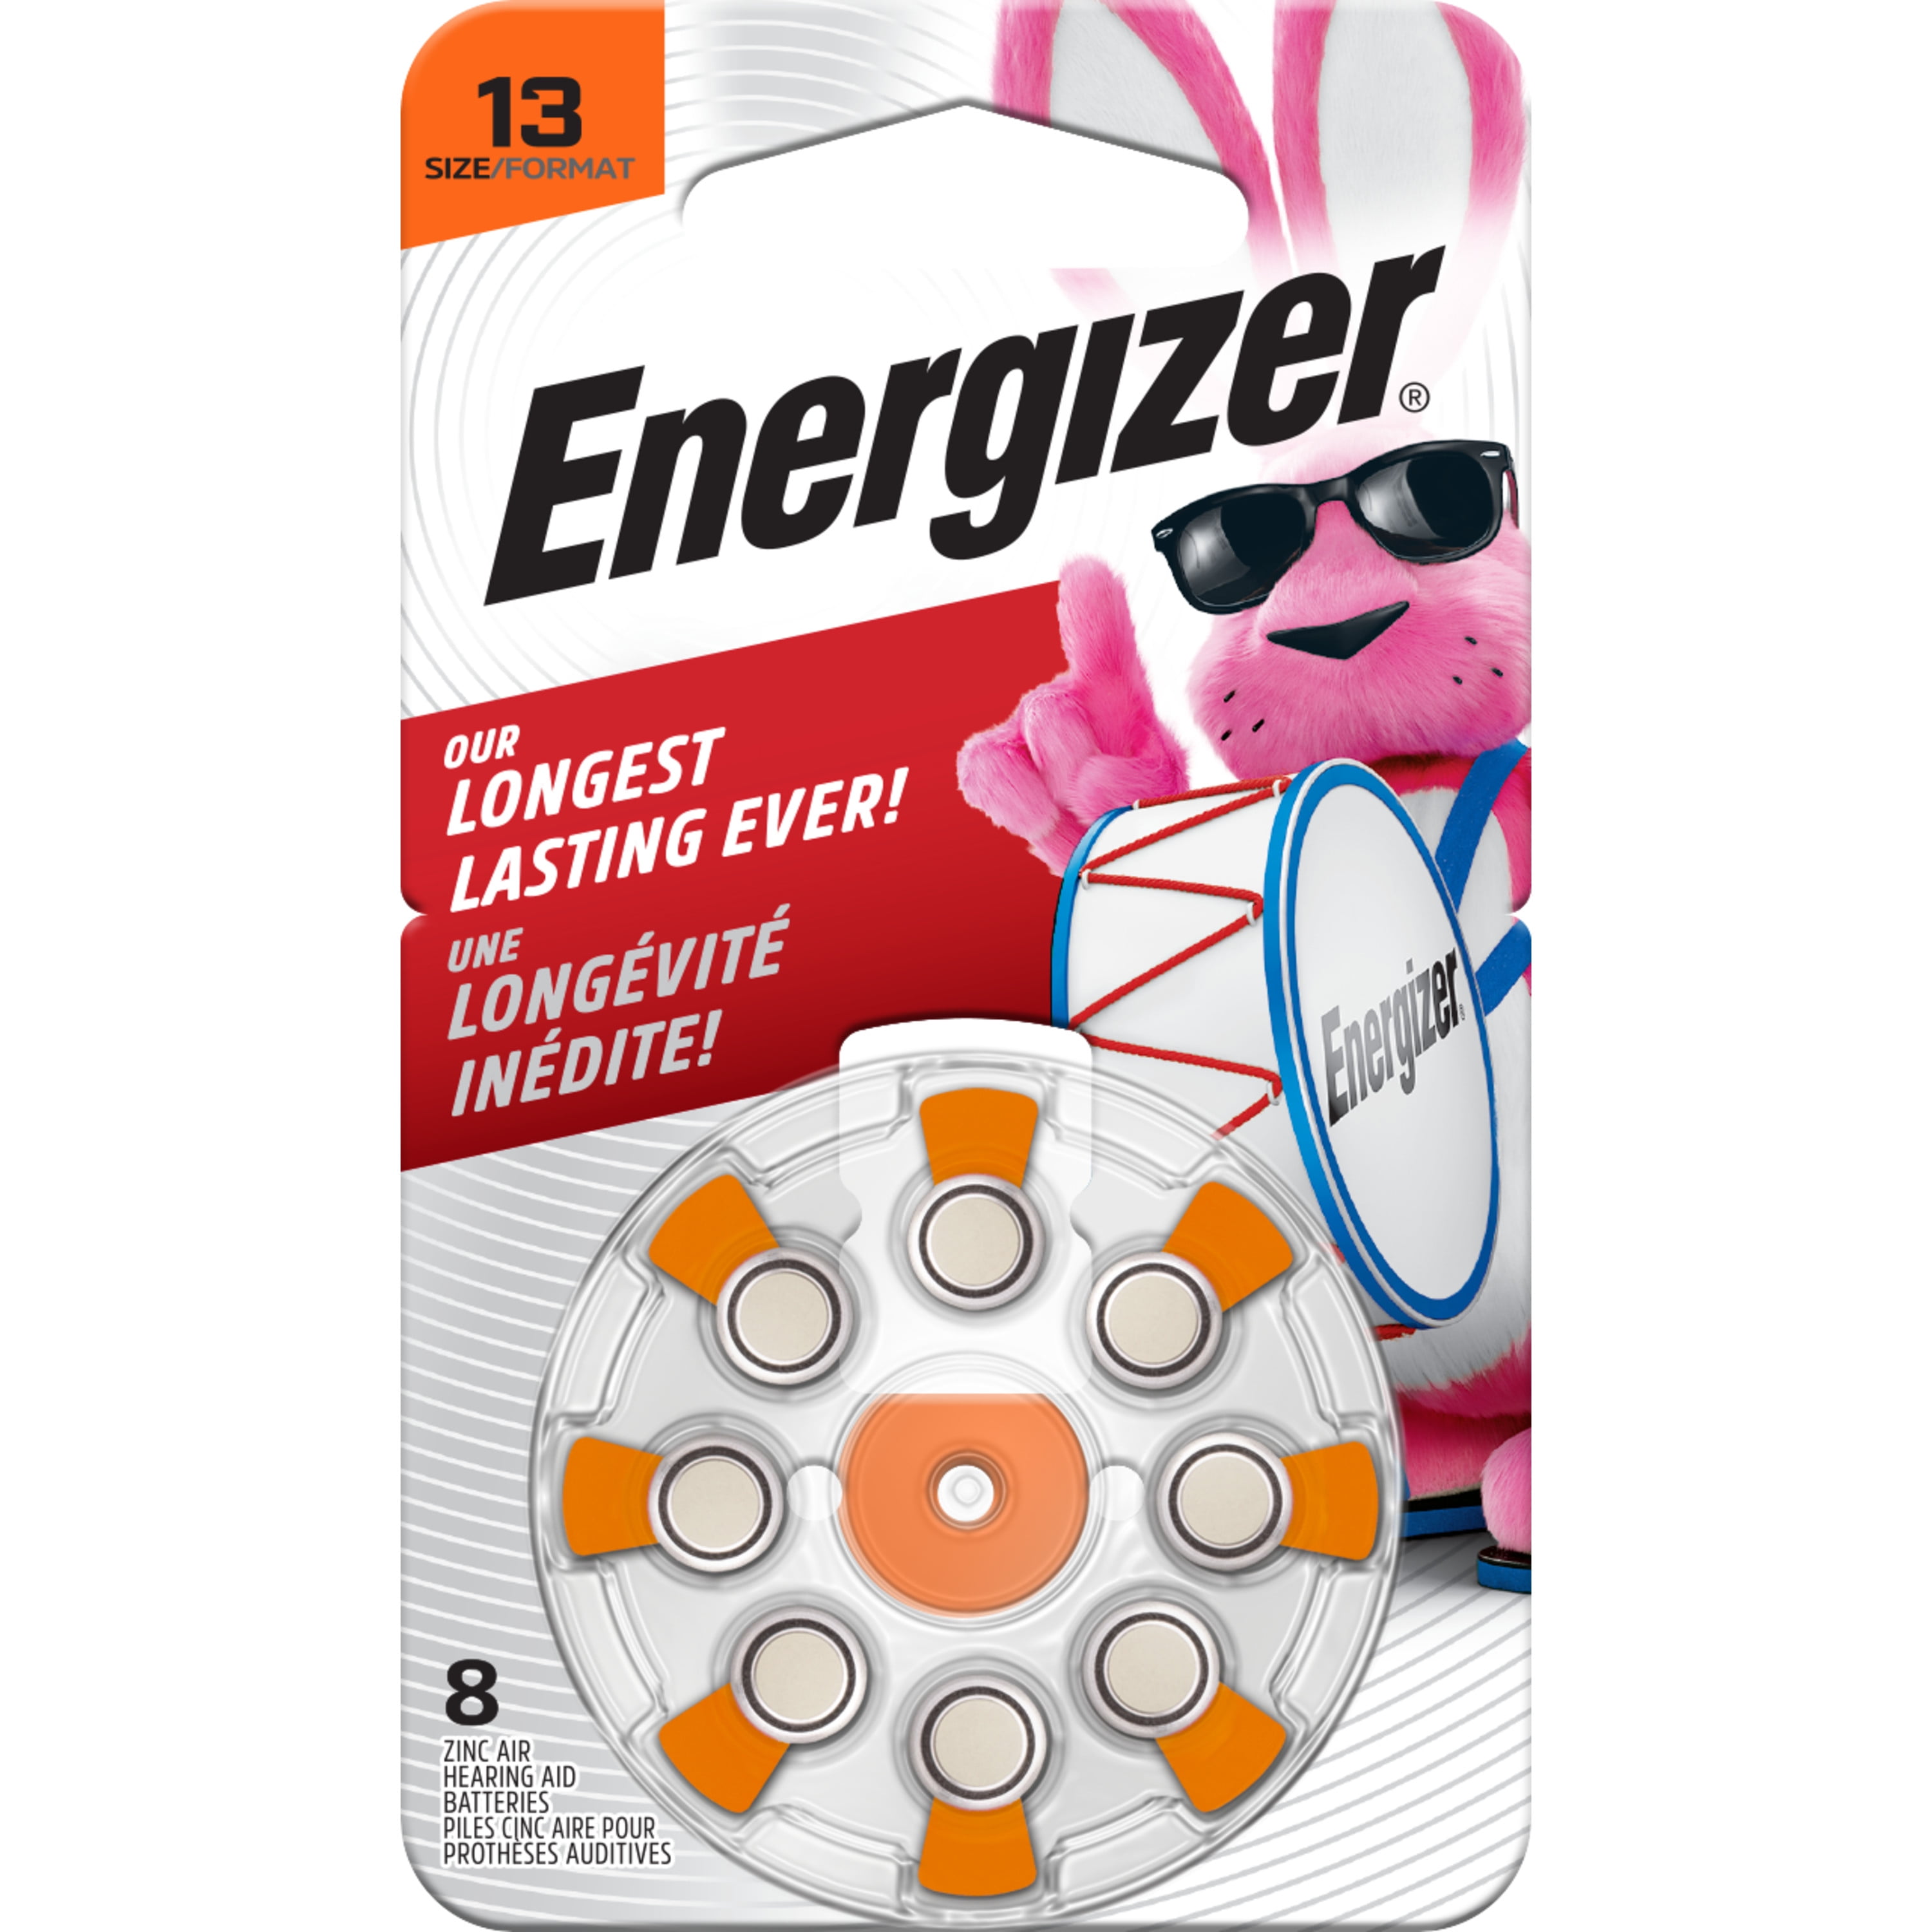 Energizer Hearing Aid Batteries Size 13, Orange Tab, 8 Pack